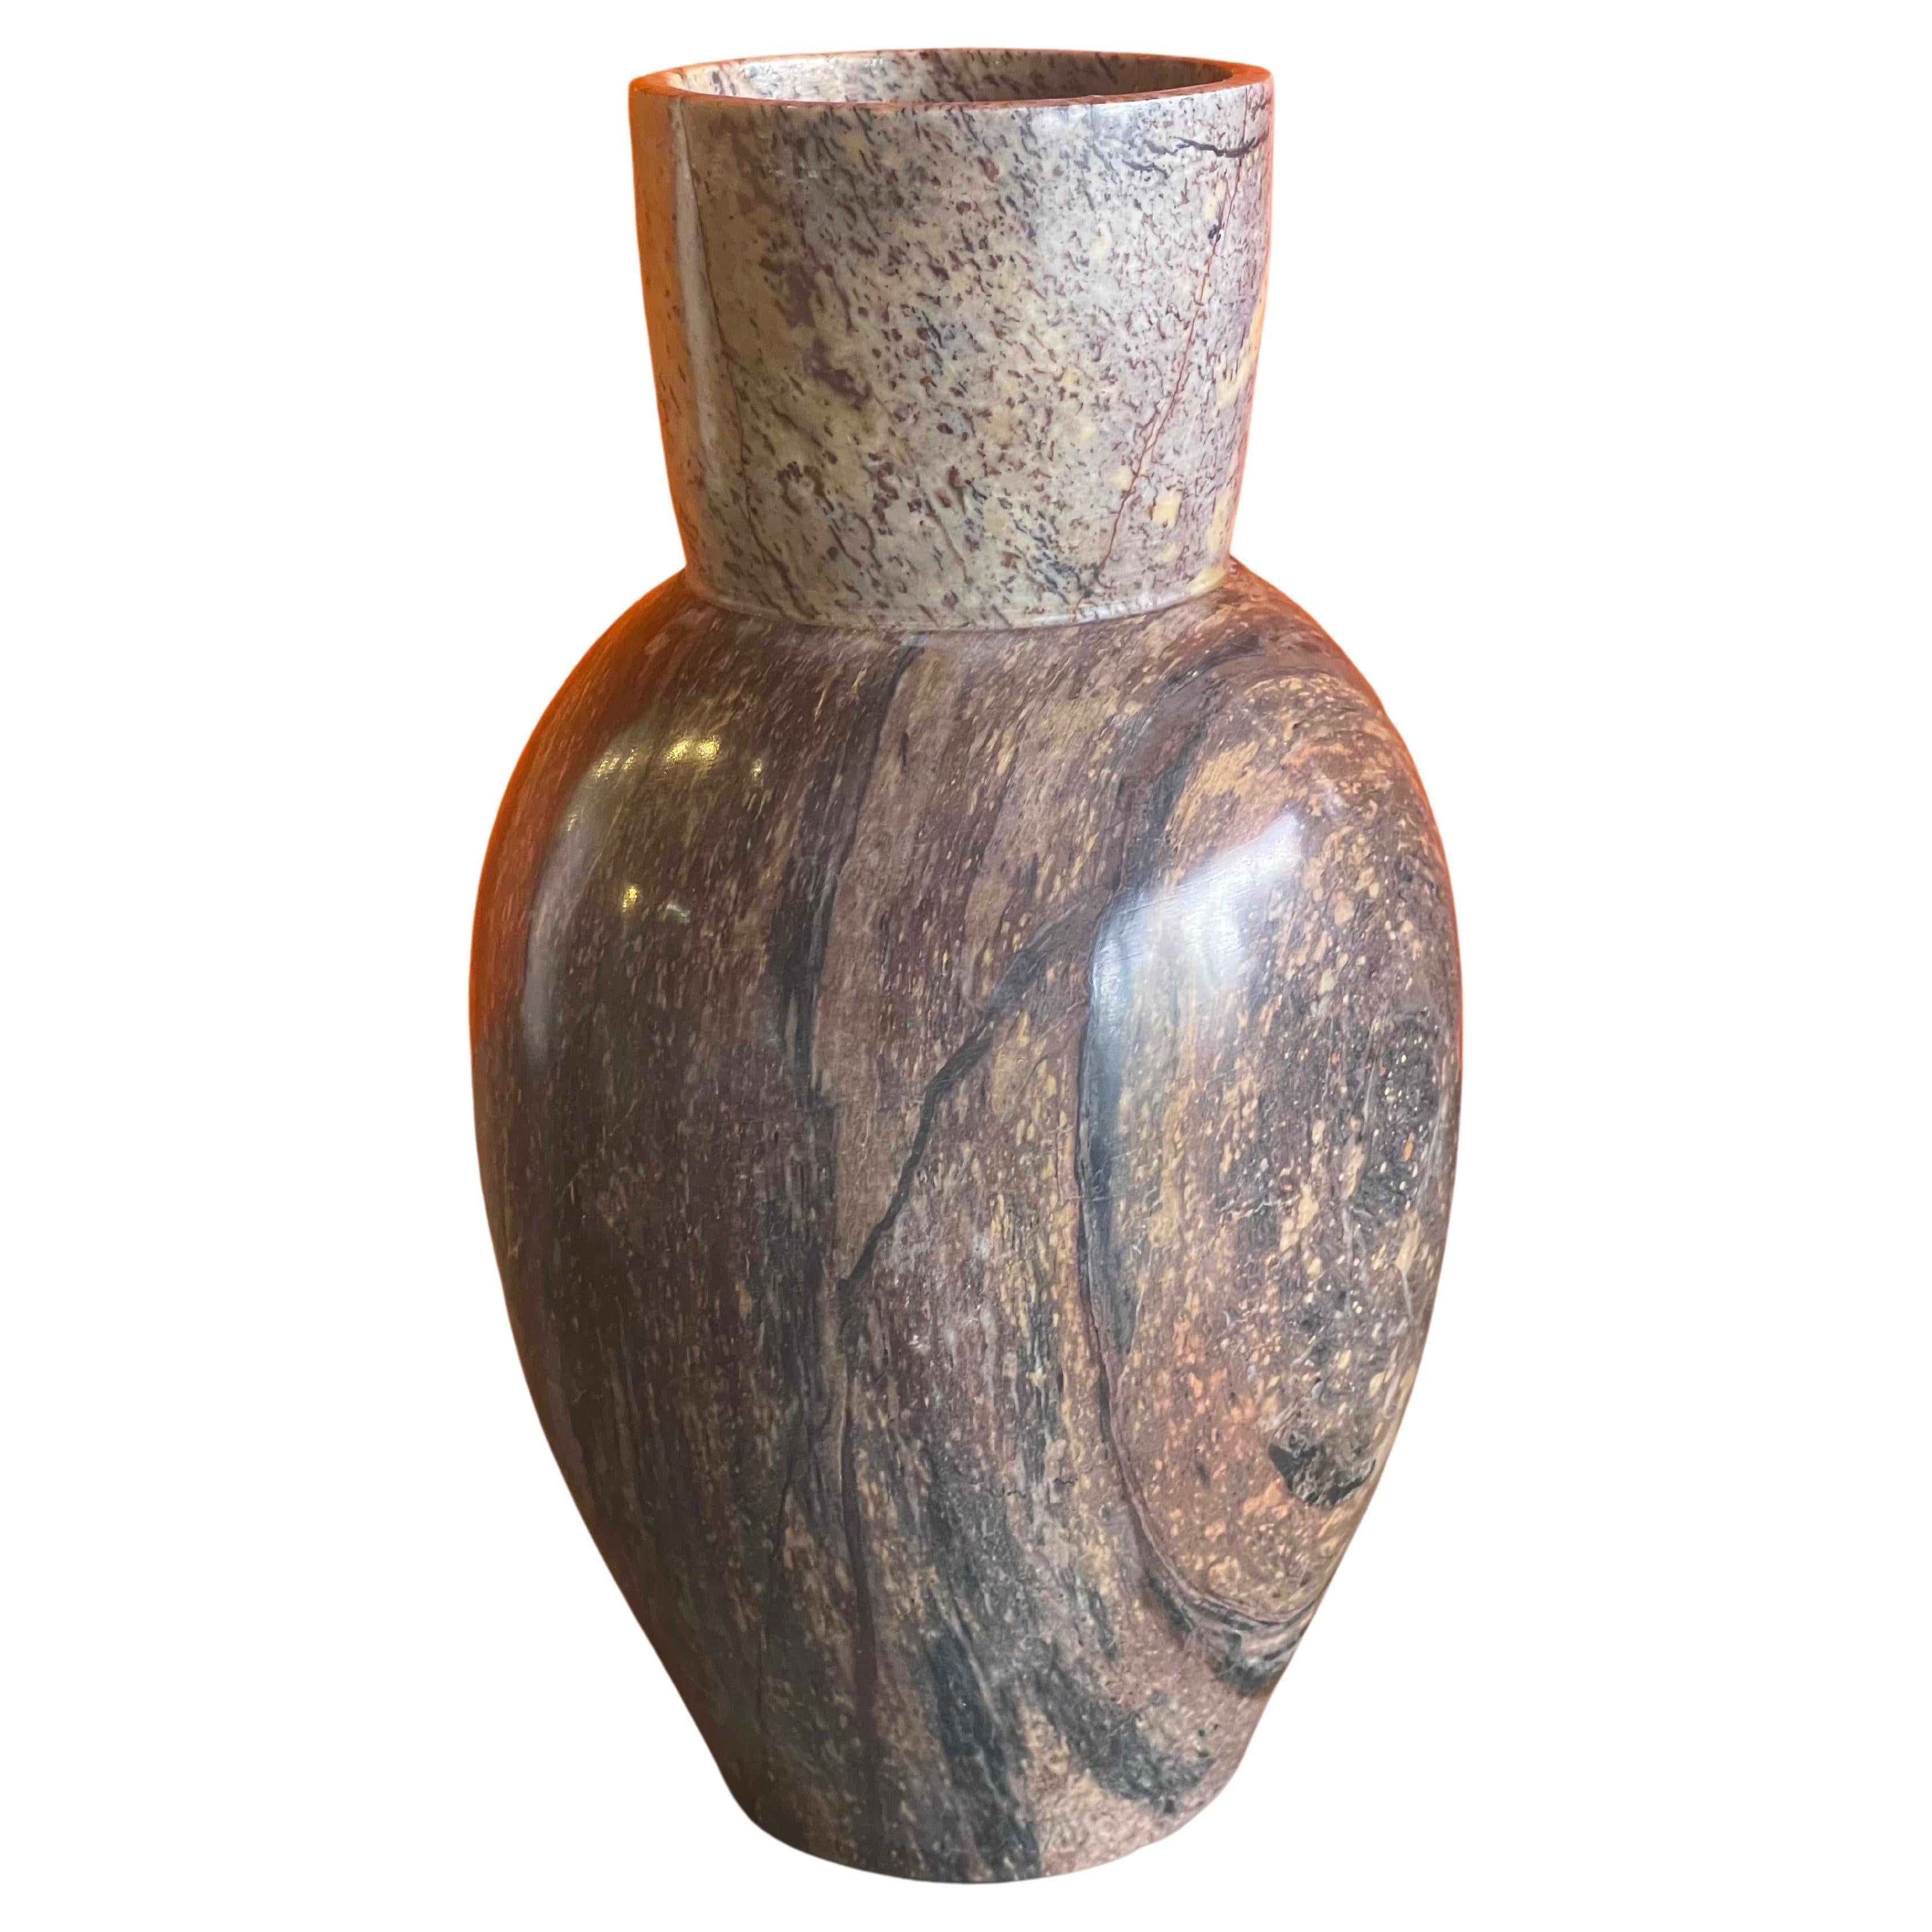 Post-Modern Italian Marble Vase